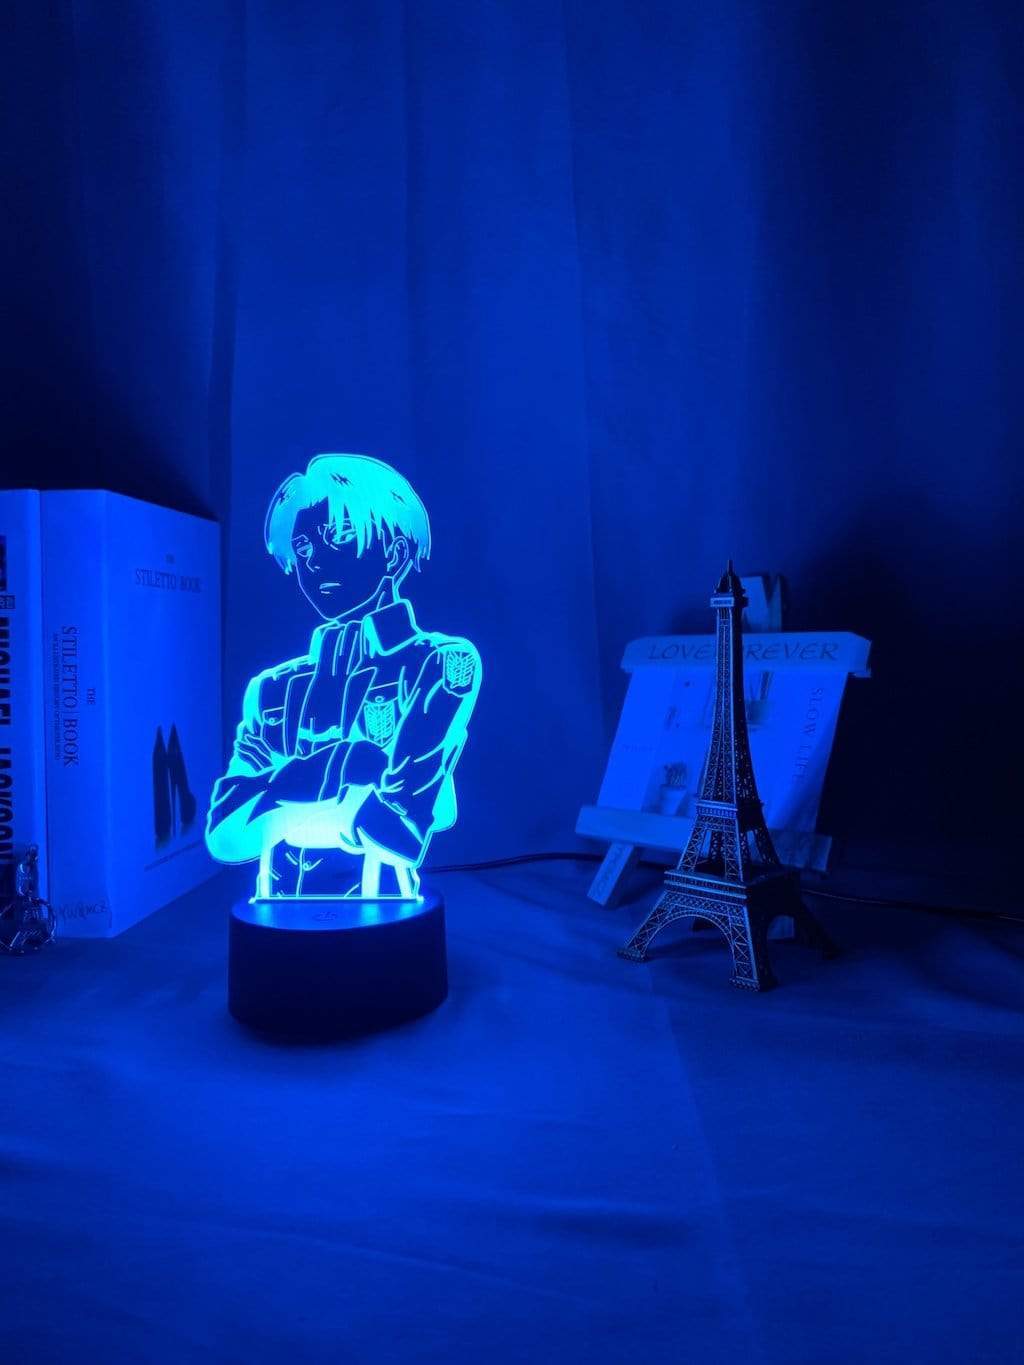 Lampe Attack on Titan for Home Room DecorCaptain Levi Ackerman Figure Night Light